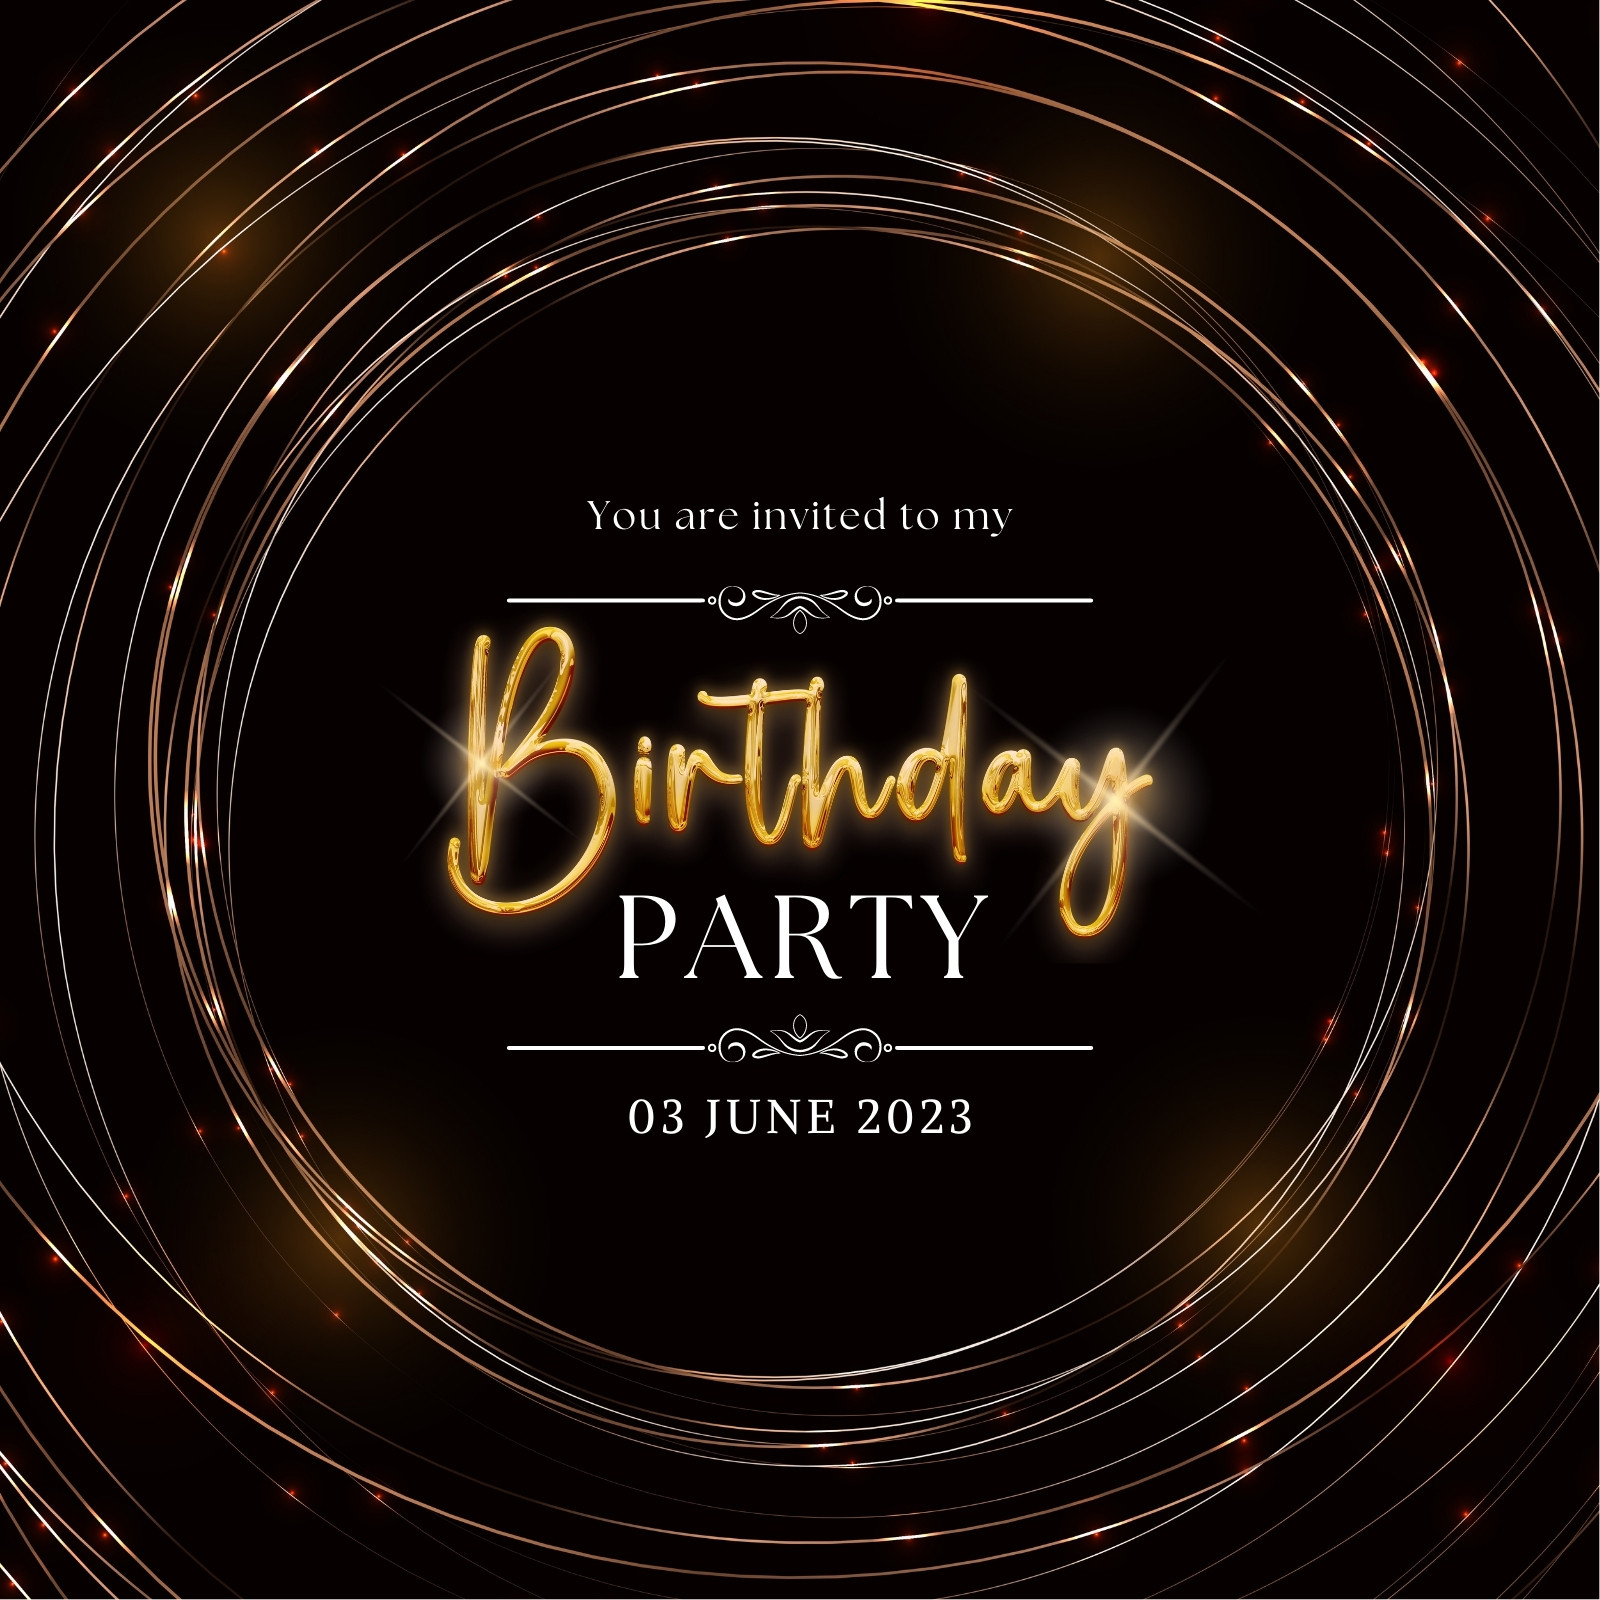 Free and printable birthday invitation templates | Canva